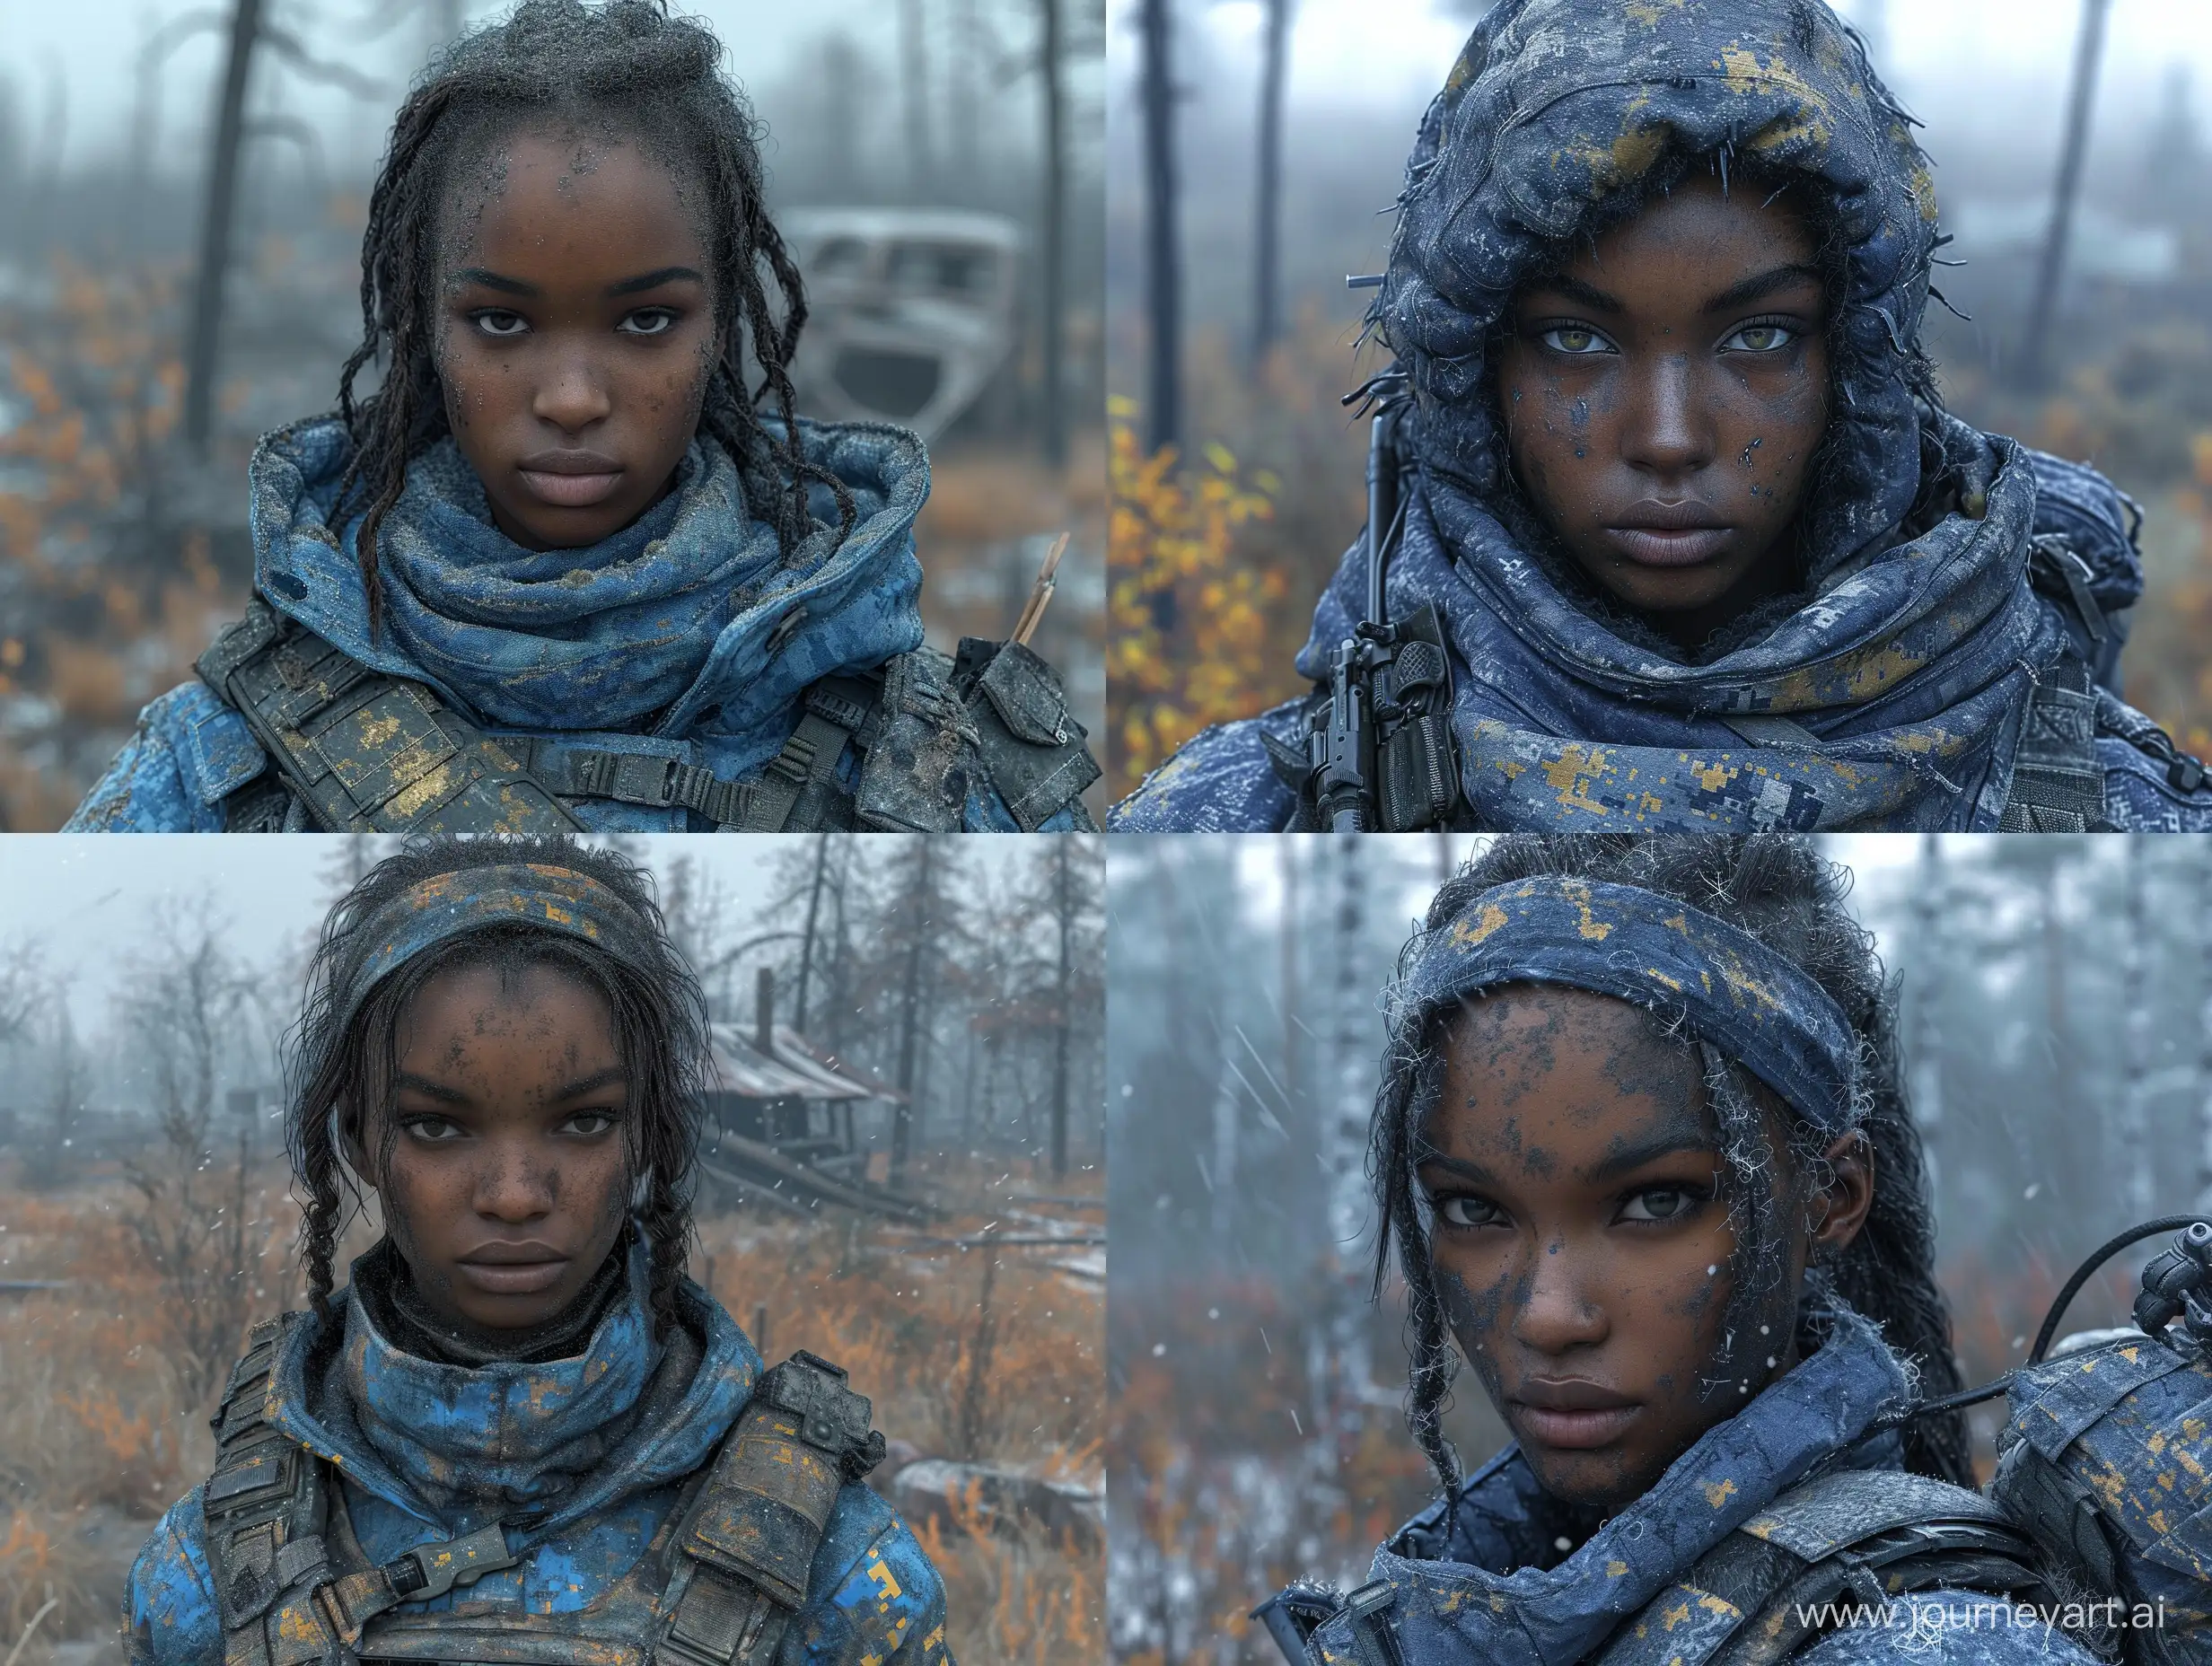 Dark-Skin-Female-Mercenary-in-STALKER-Video-Game-with-Black-Tactical-Gear-and-Blue-Digital-Camo